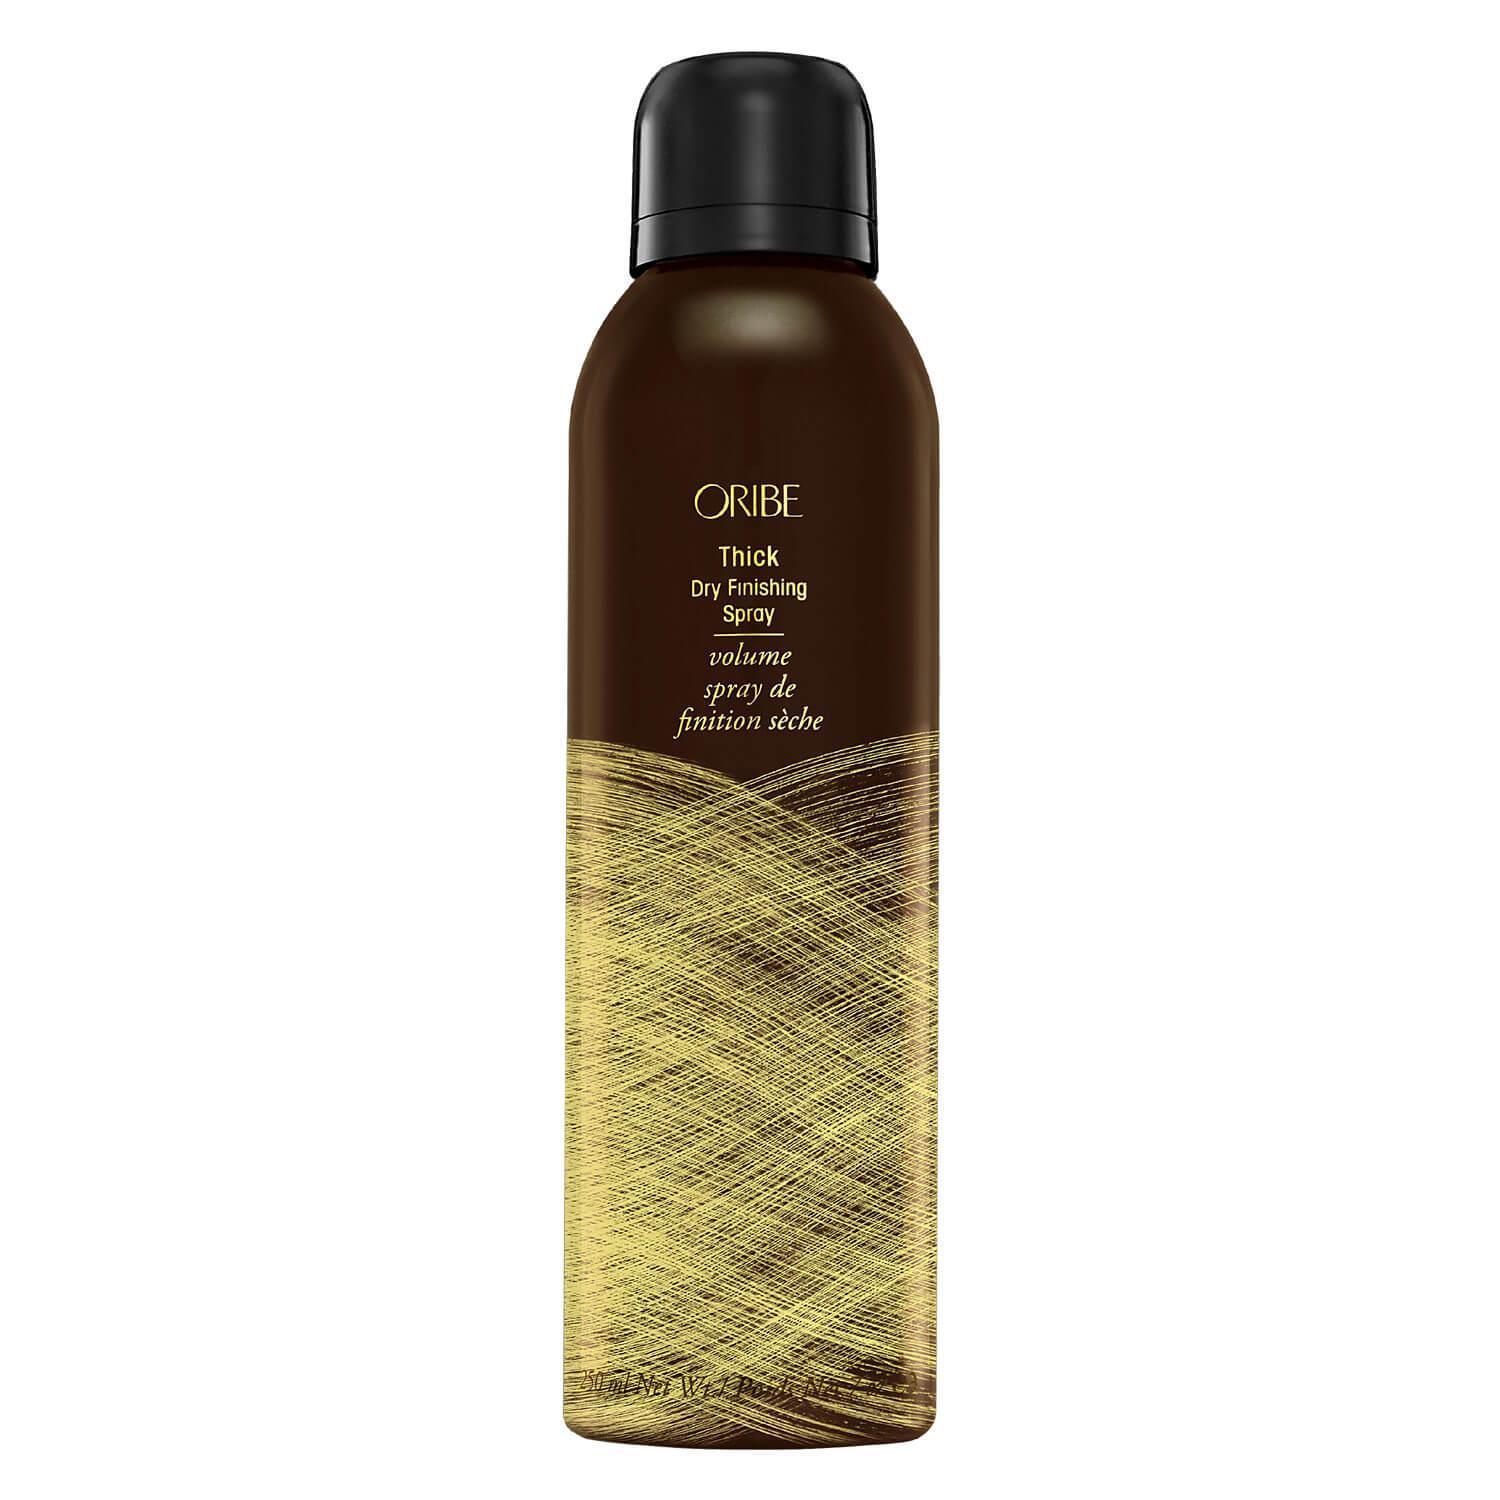 Oribe Style - Thick Dry Finishing Spray